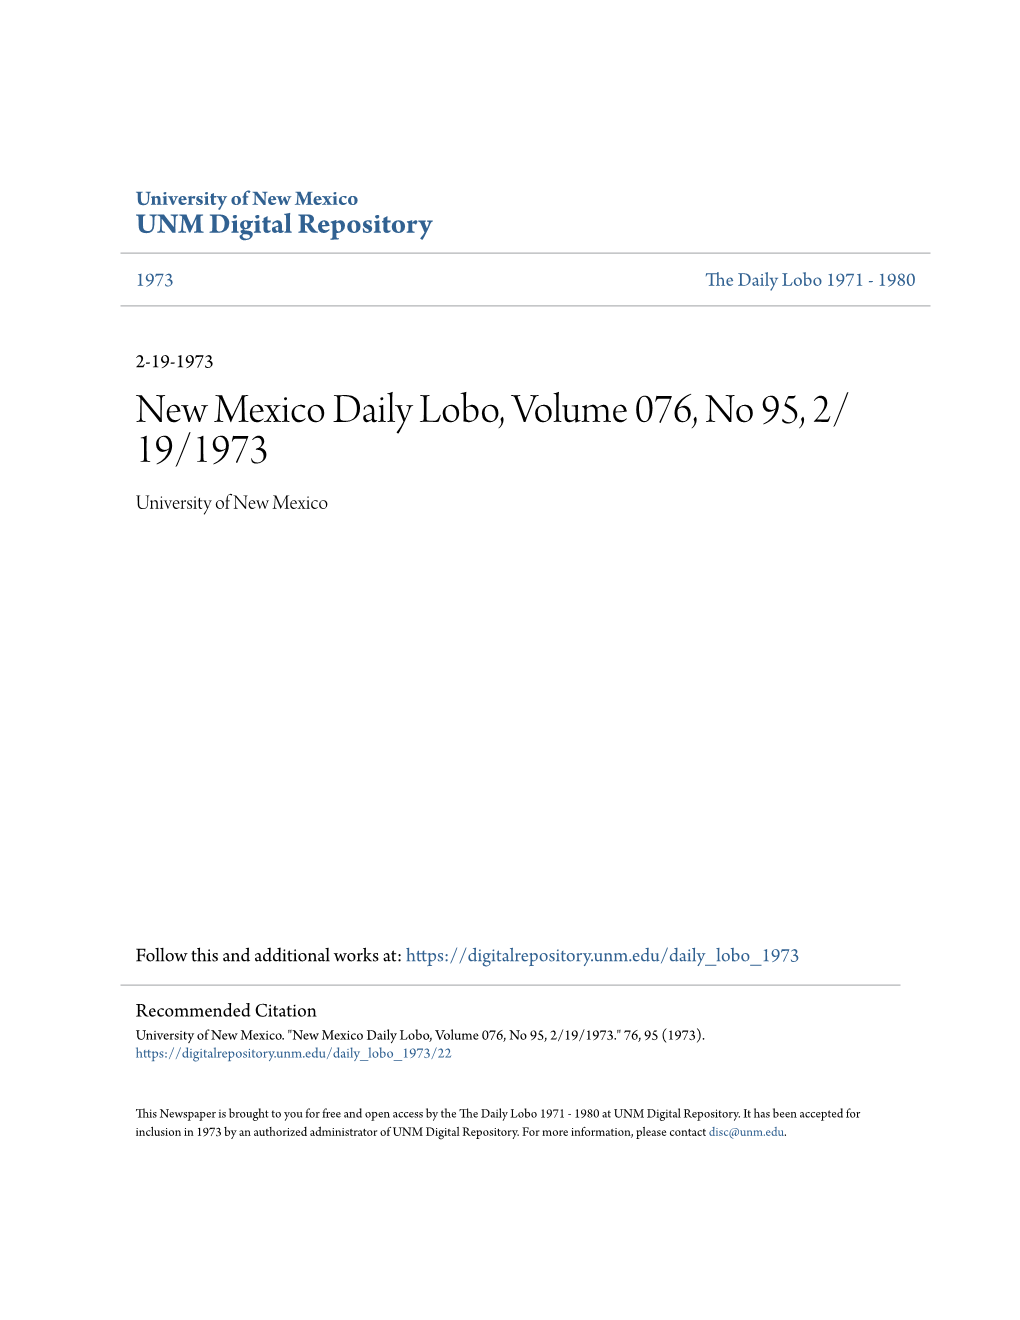 New Mexico Daily Lobo, Volume 076, No 95, 2/19/1973." 76, 95 (1973)